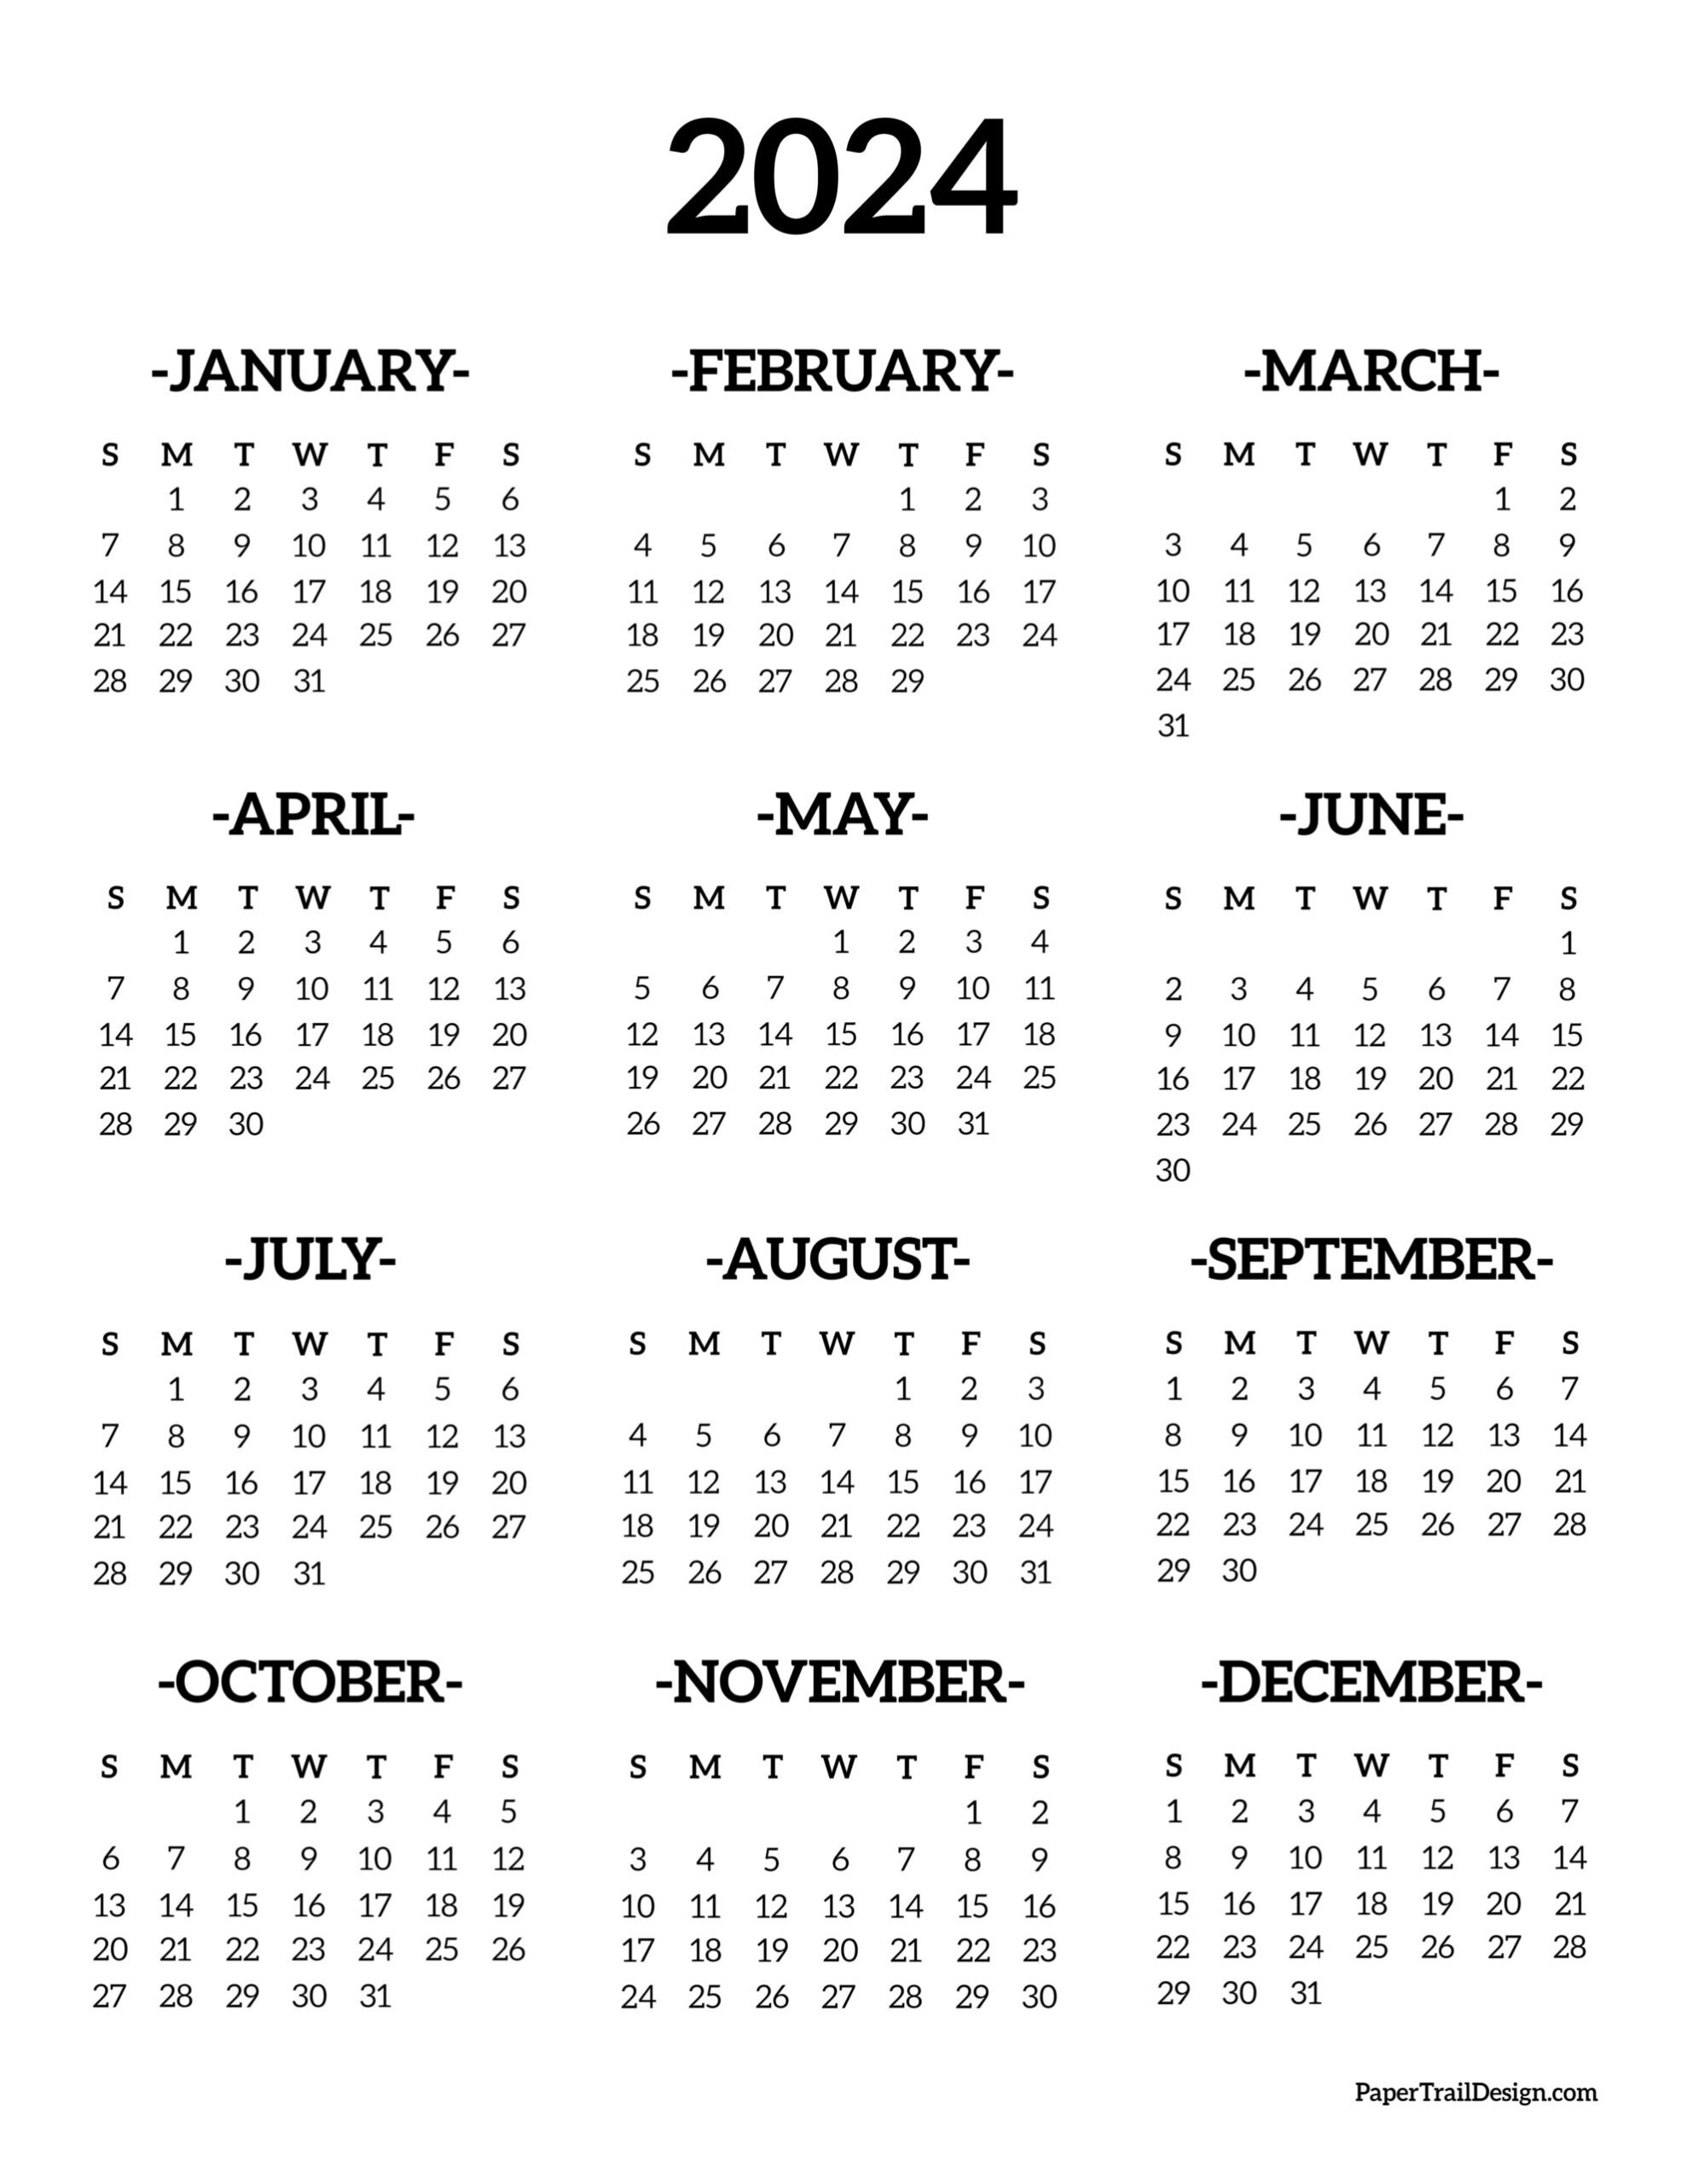 Calendar 2024 Printable One Page - Paper Trail Design | Calendar 2024 Printable Free